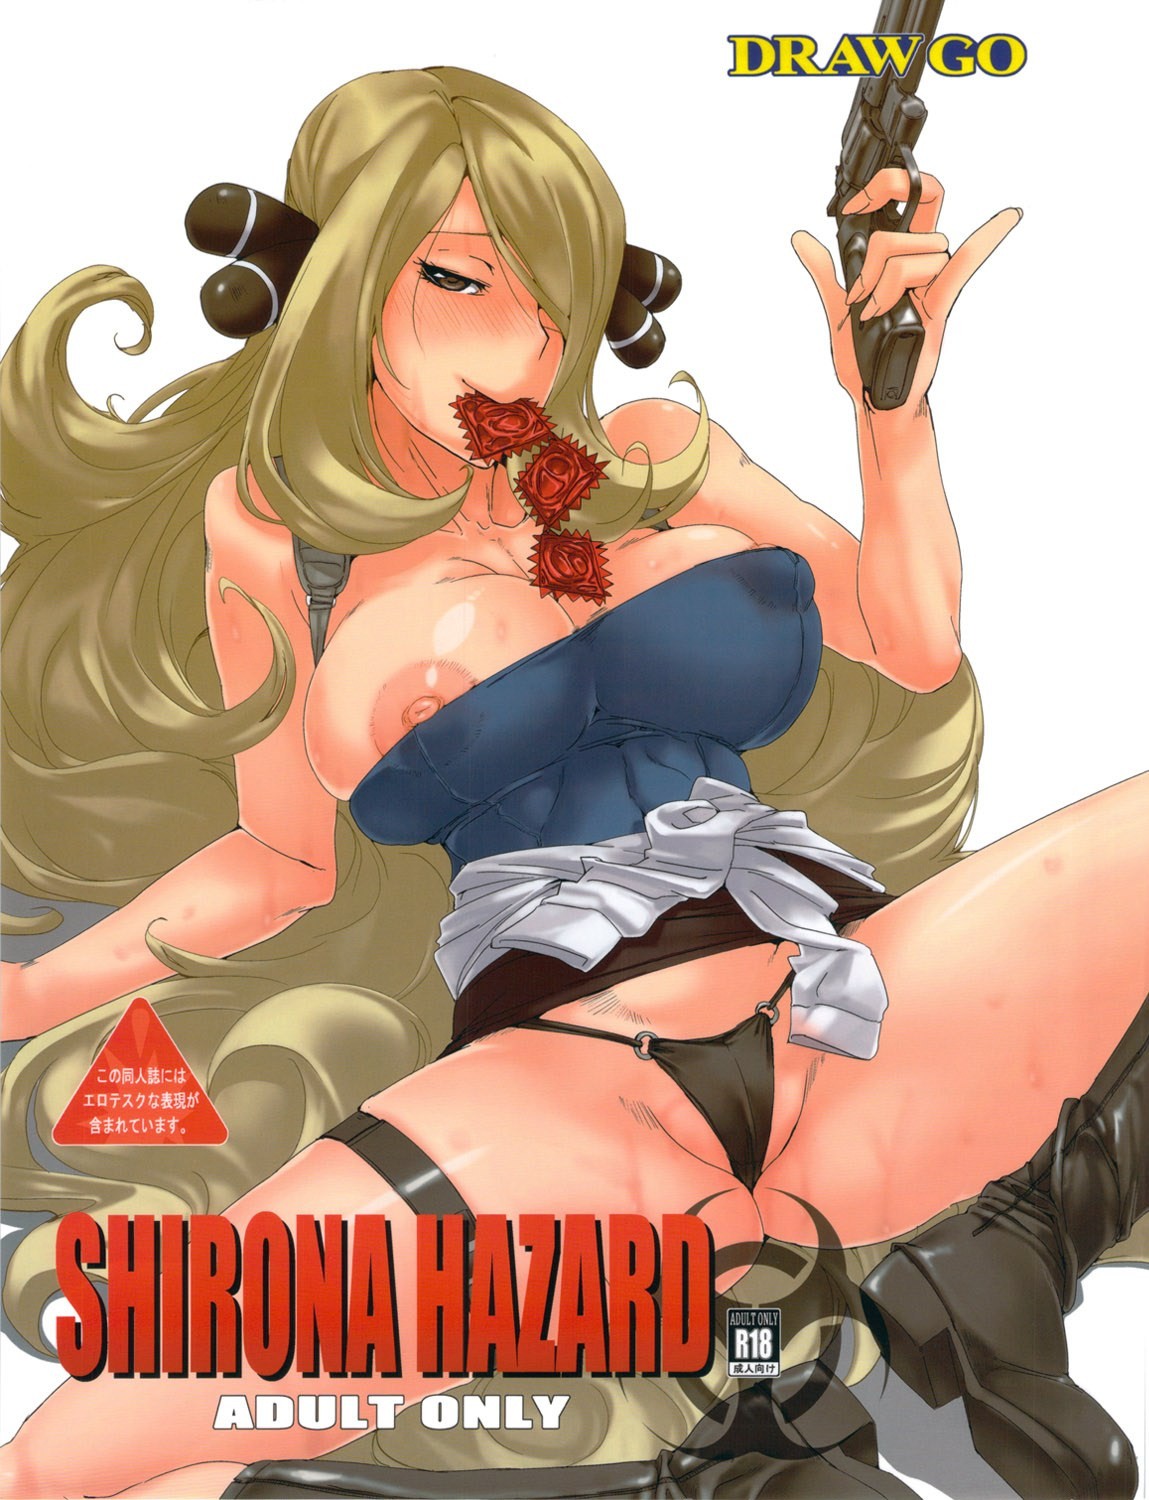 SHIRONA HAZARD hentai manga picture 1